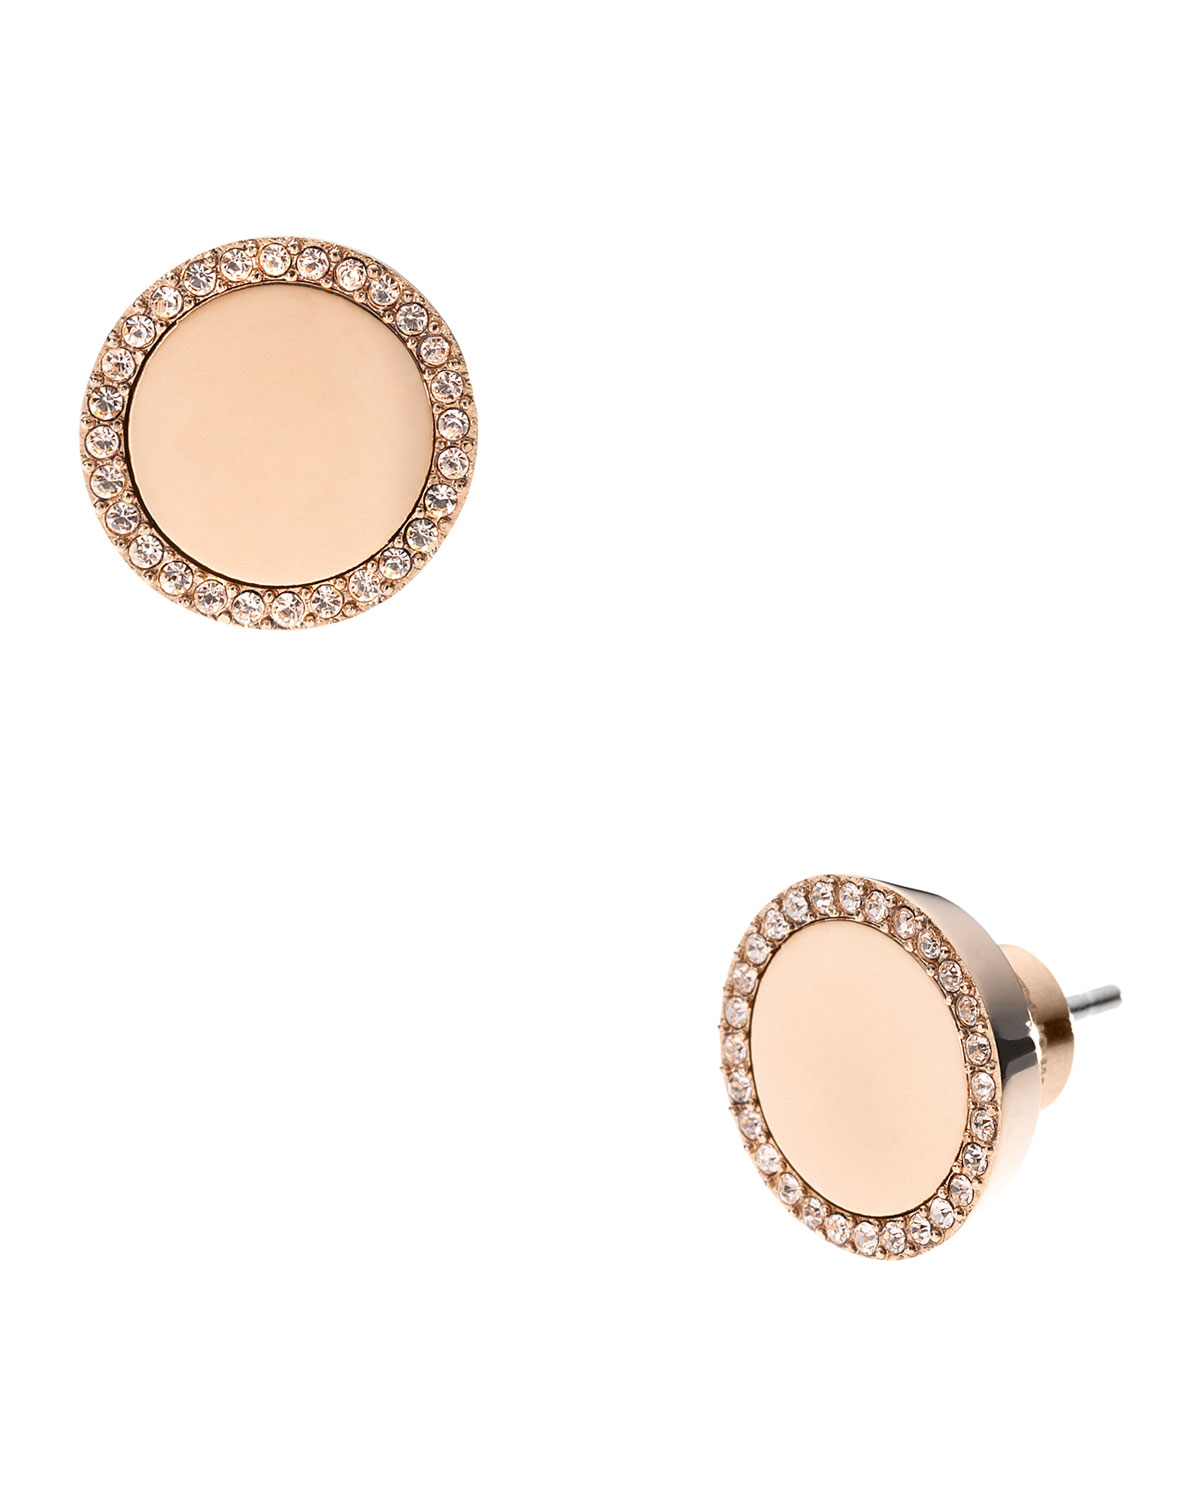 michael kors earrings rose gold studs for Sale OFF 68%